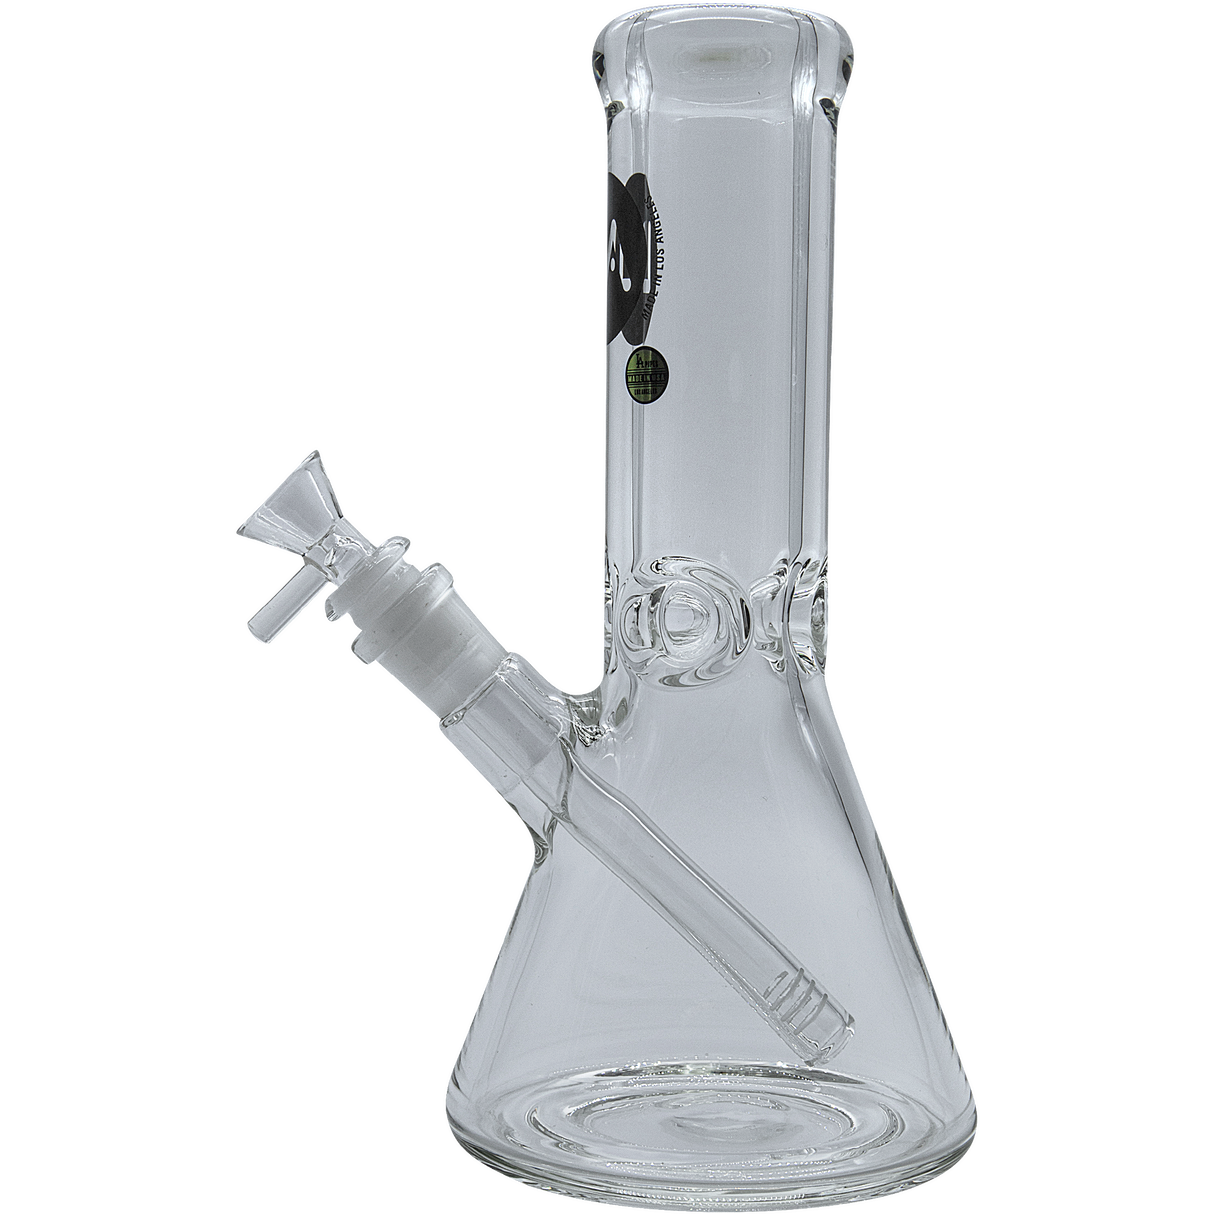 LA Pipes "Agent Stout" Beaker Bong, 9mm Thick Borosilicate Glass, Front View